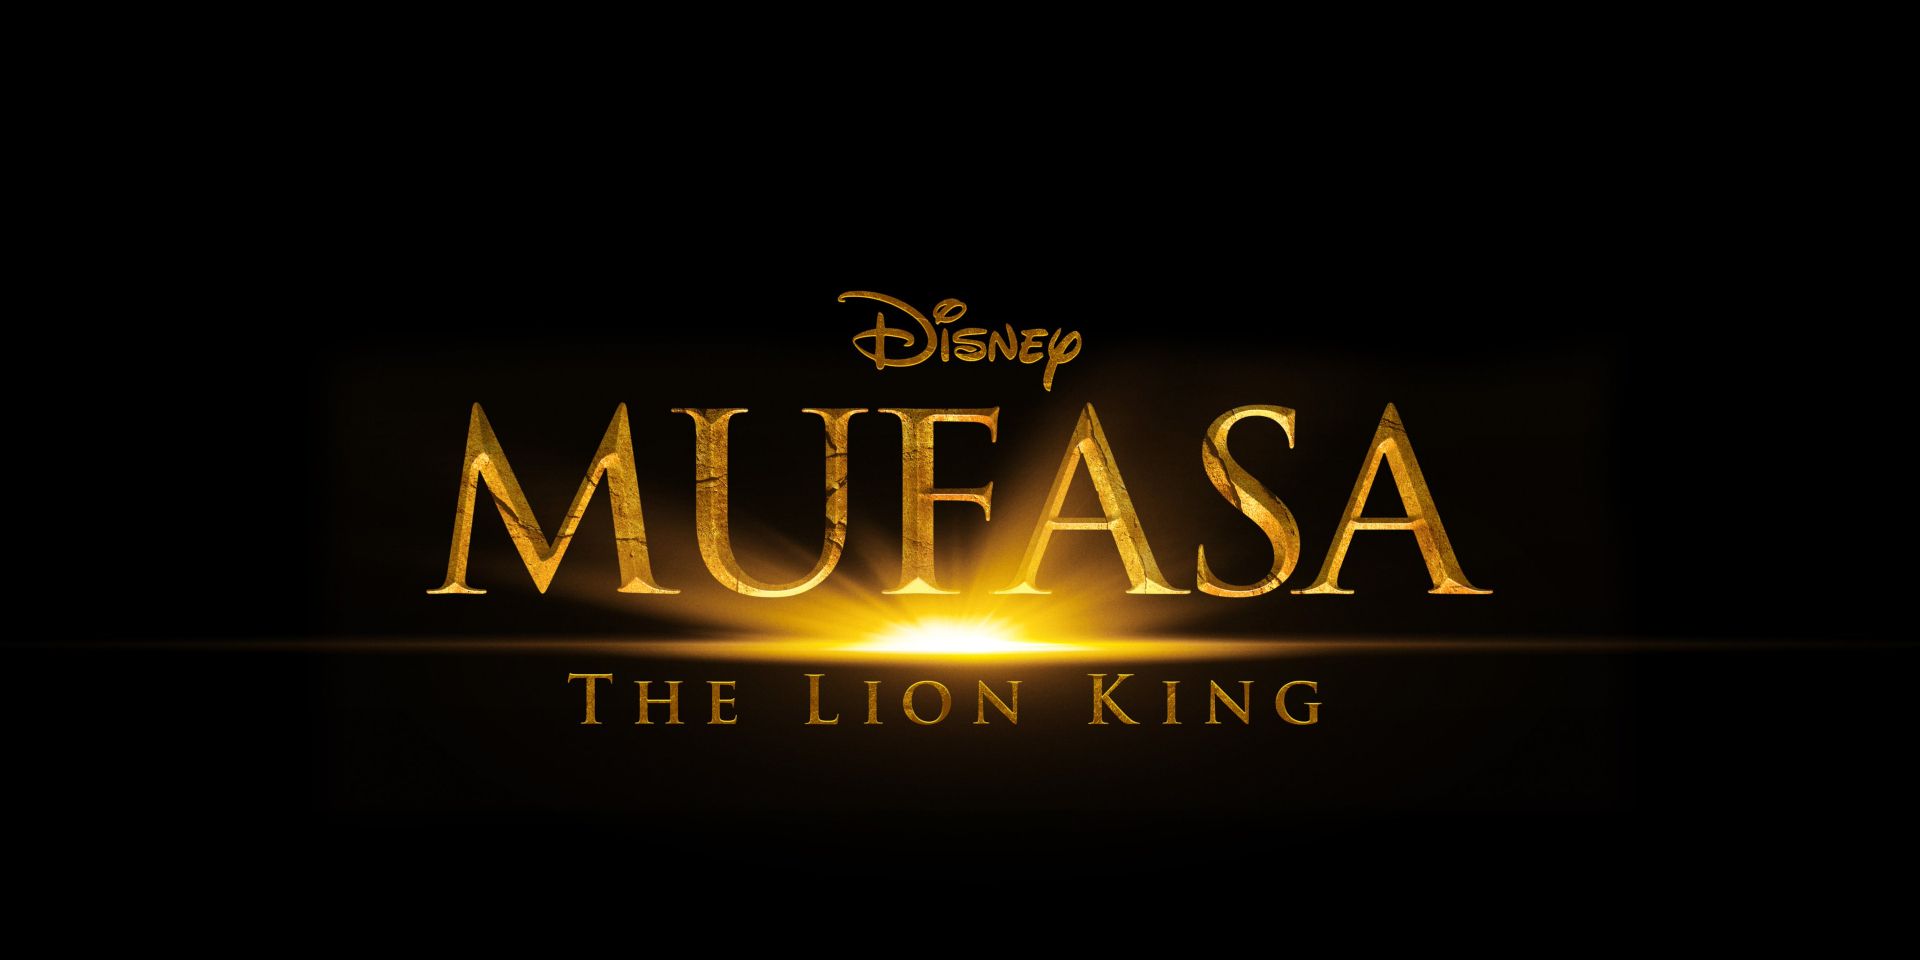 Mufasa The Lion King prequel promo image